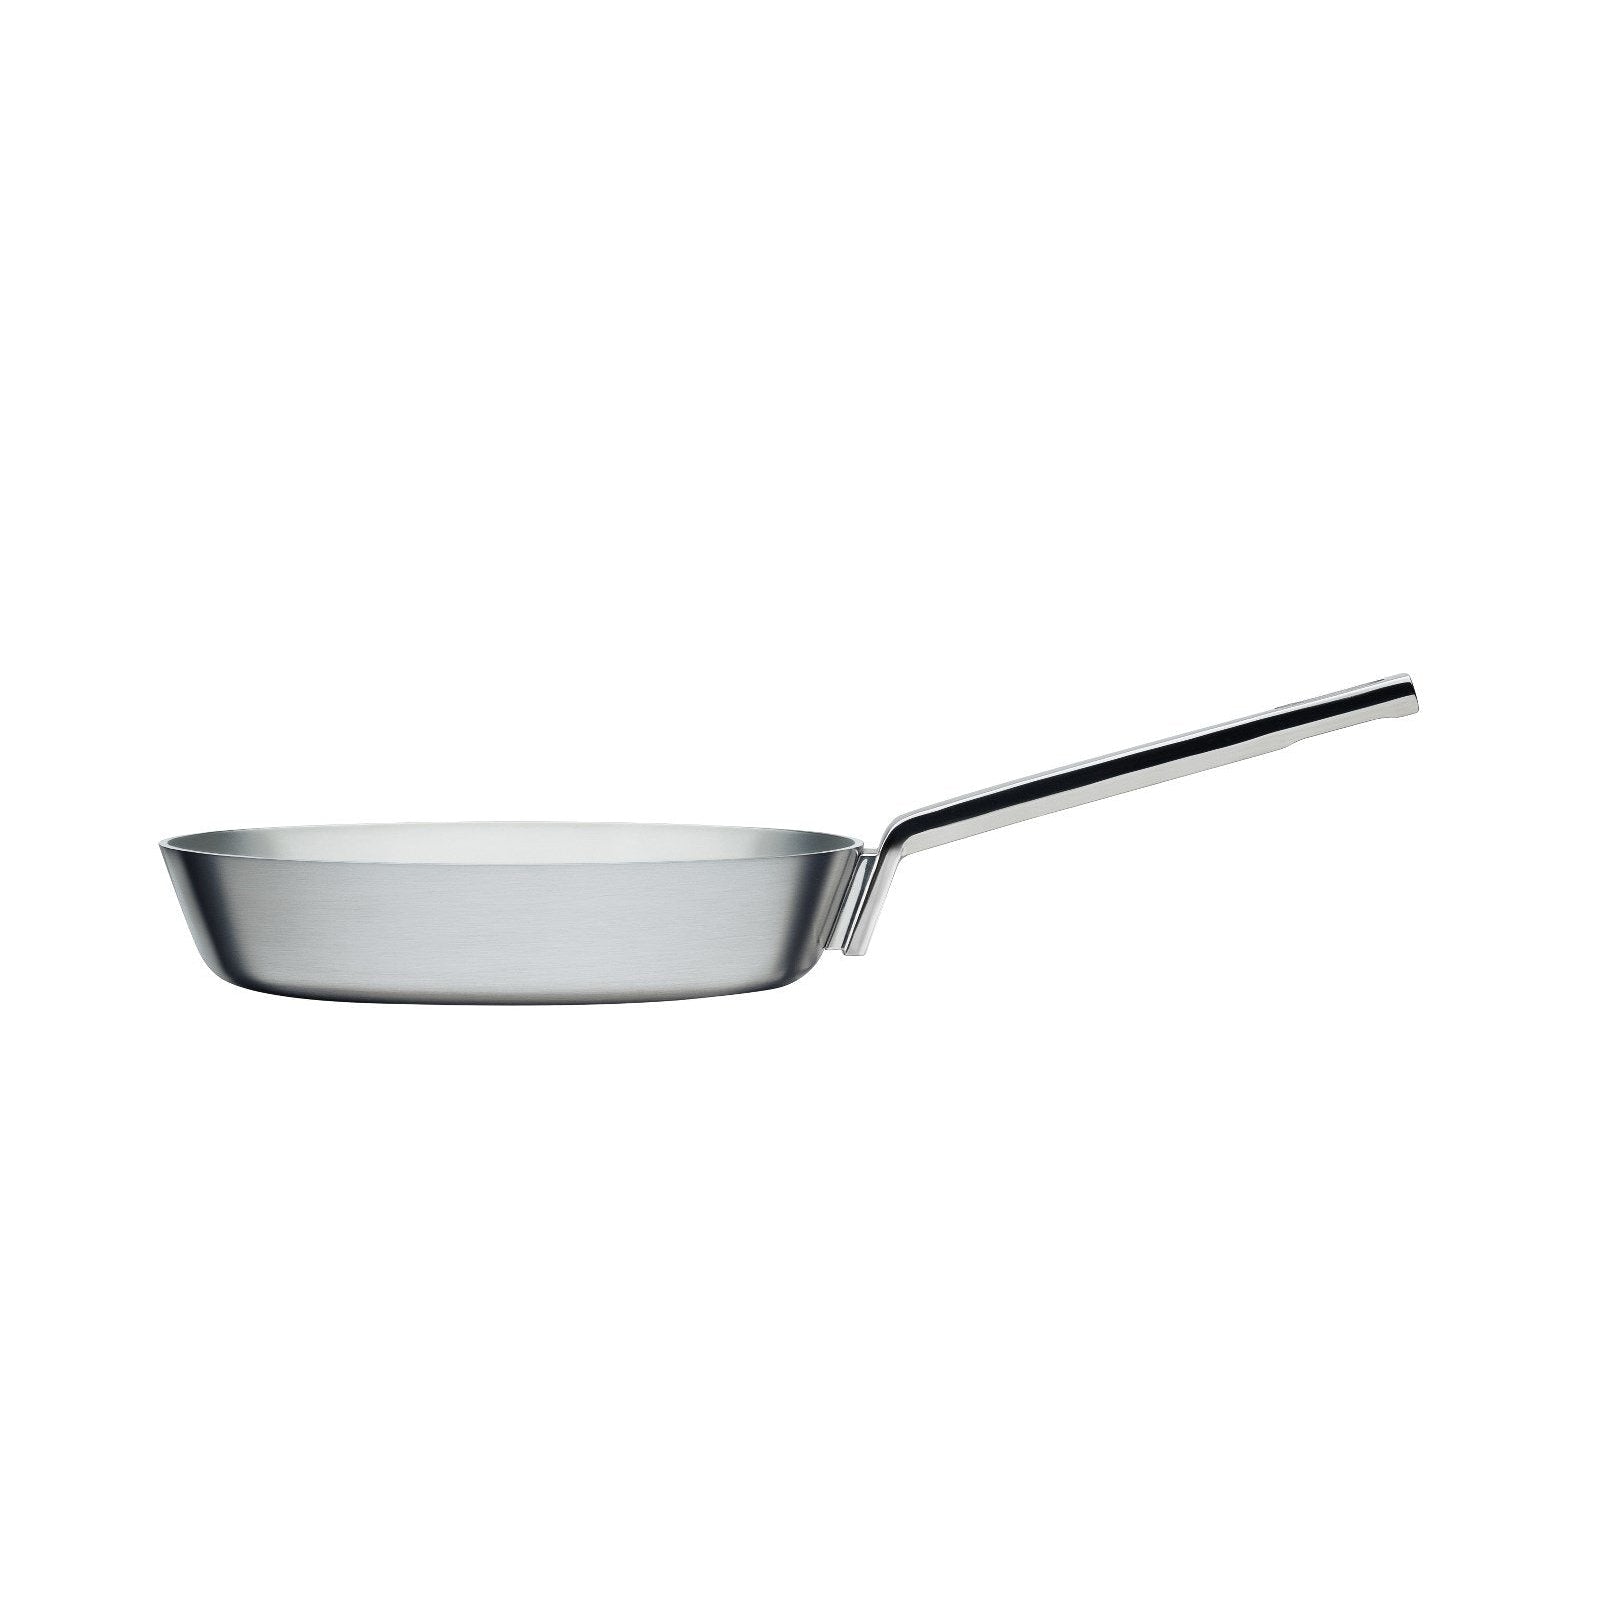 ITTALA Herramientas Frying Pan, 24 cm